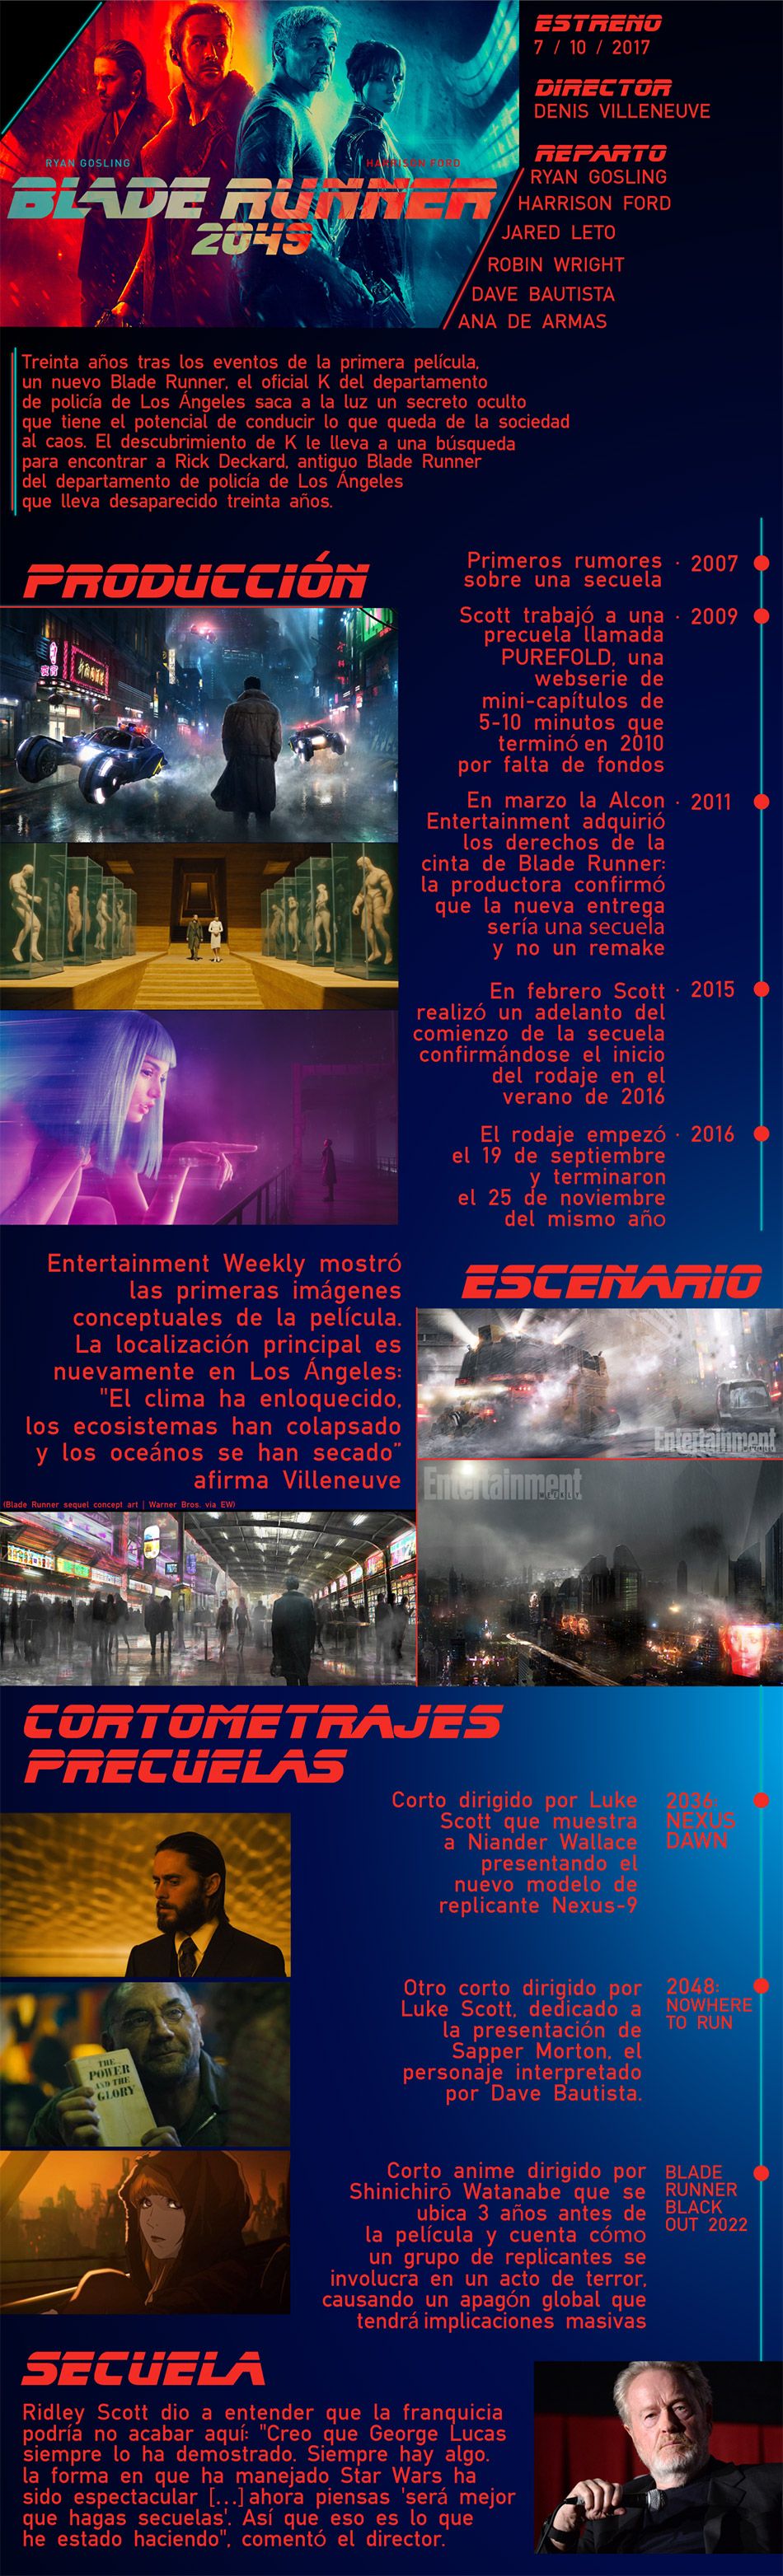 Infografía de Blade Runner 2049 